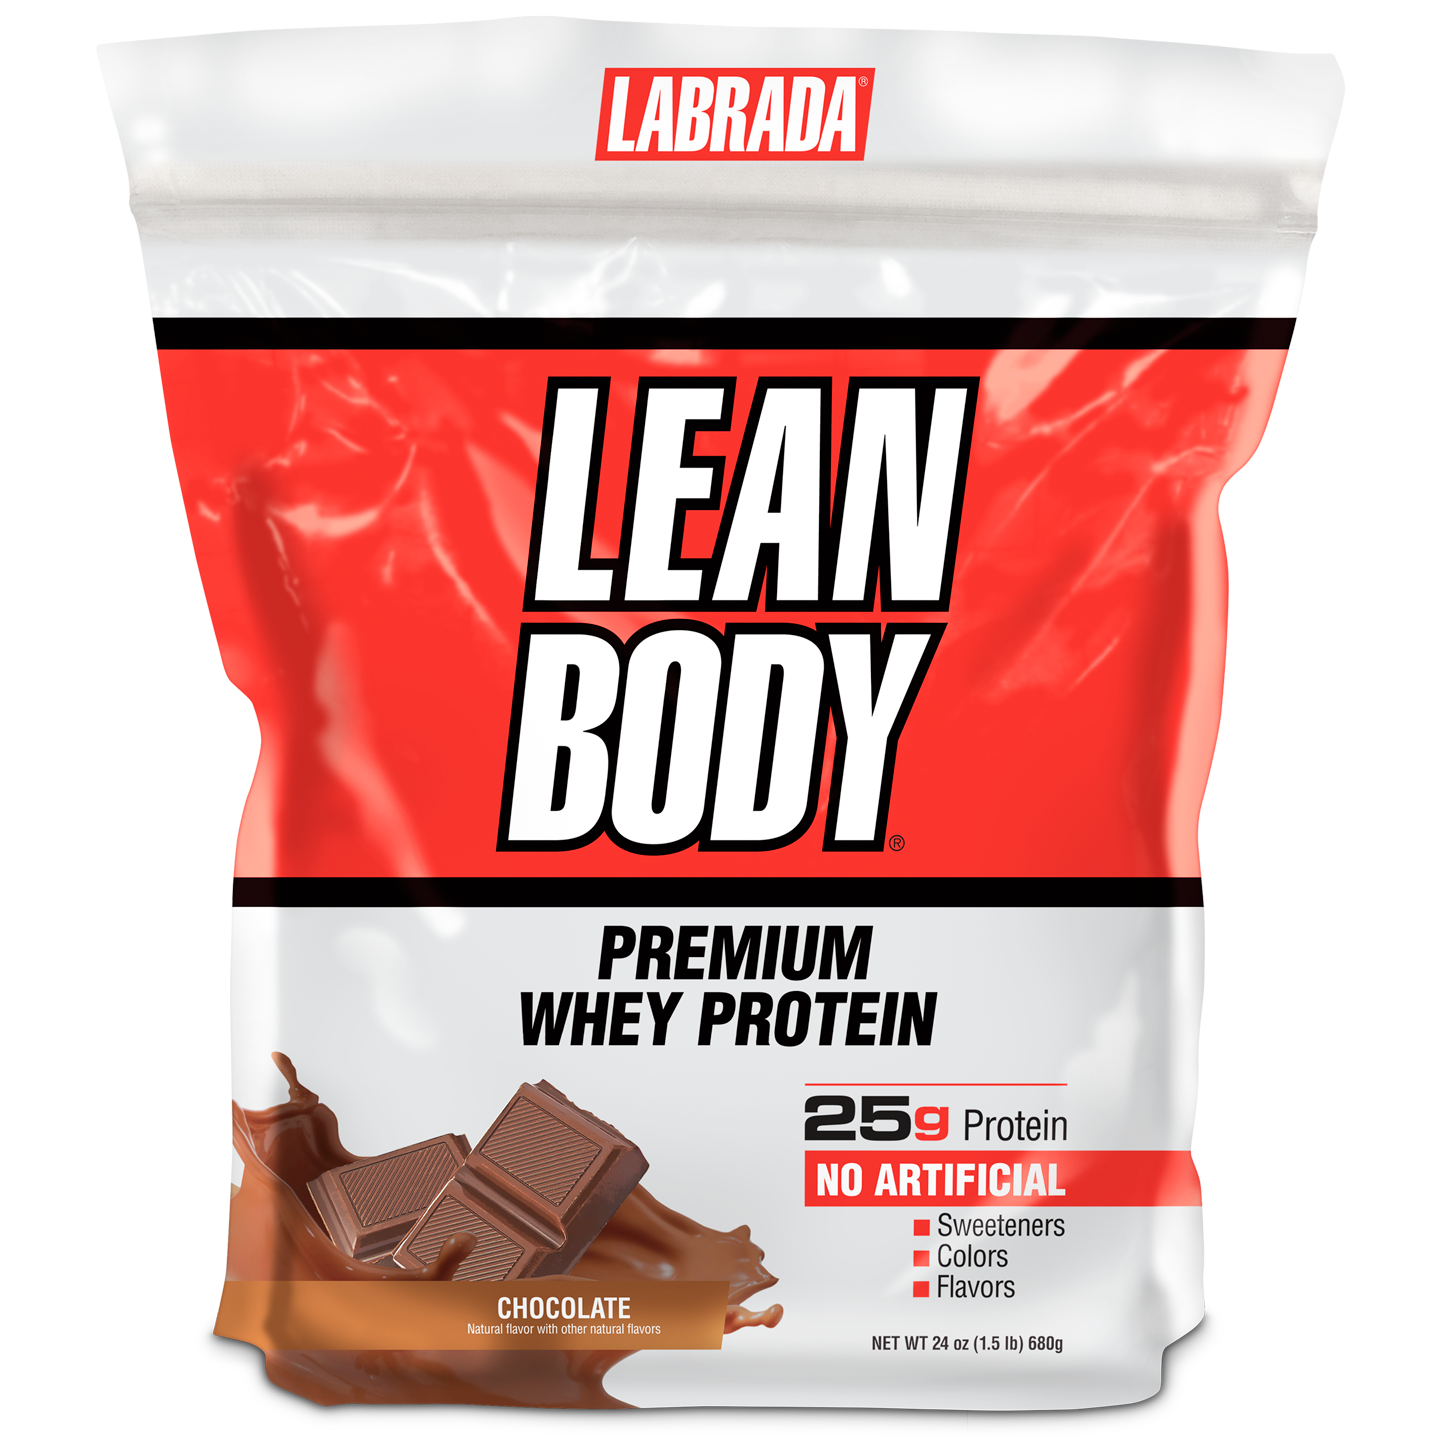 Lean Body Naturally Sweetened Protein Shake